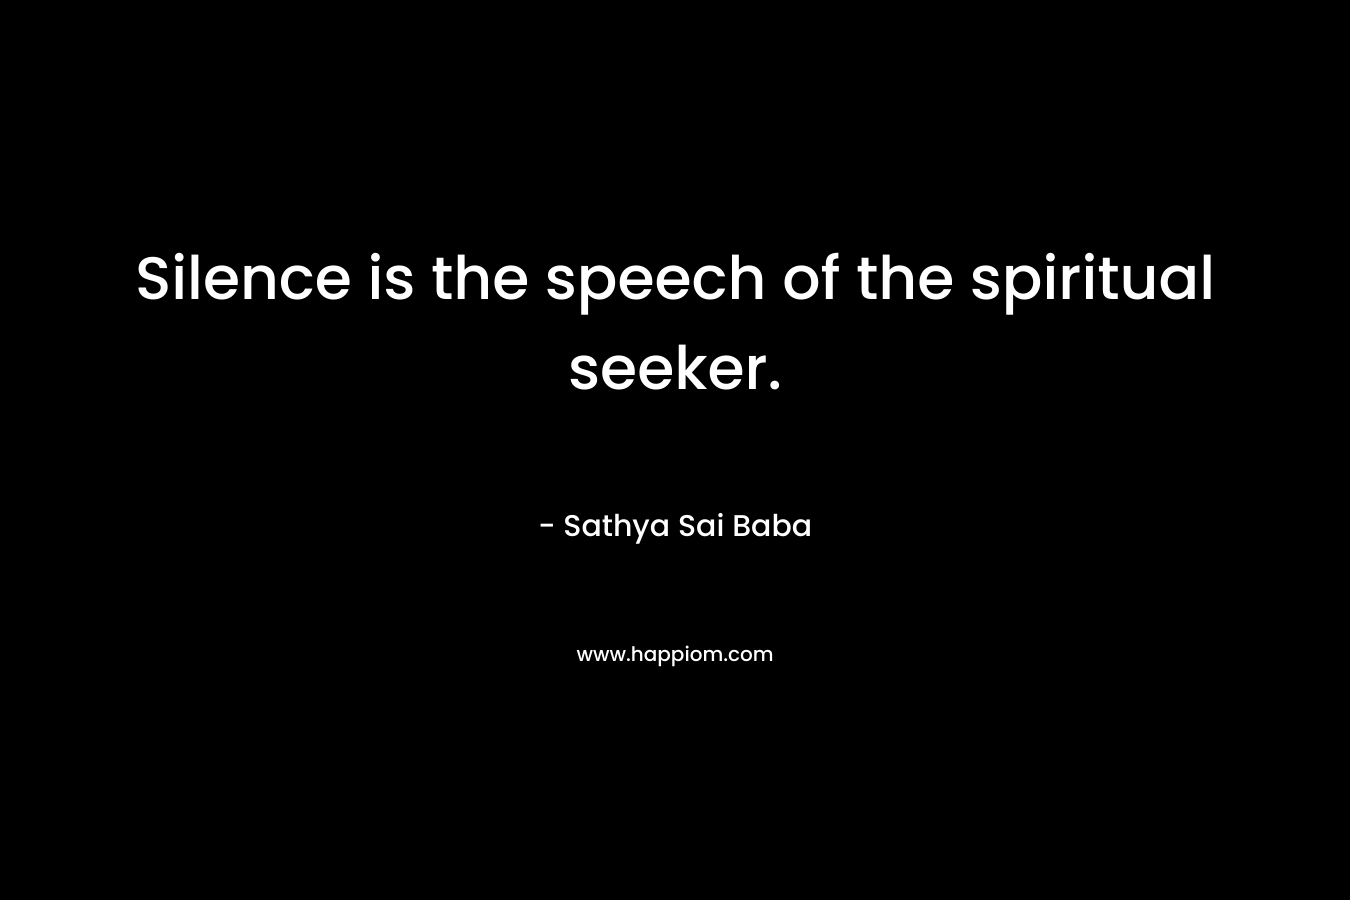 Silence is the speech of the spiritual seeker. – Sathya Sai Baba